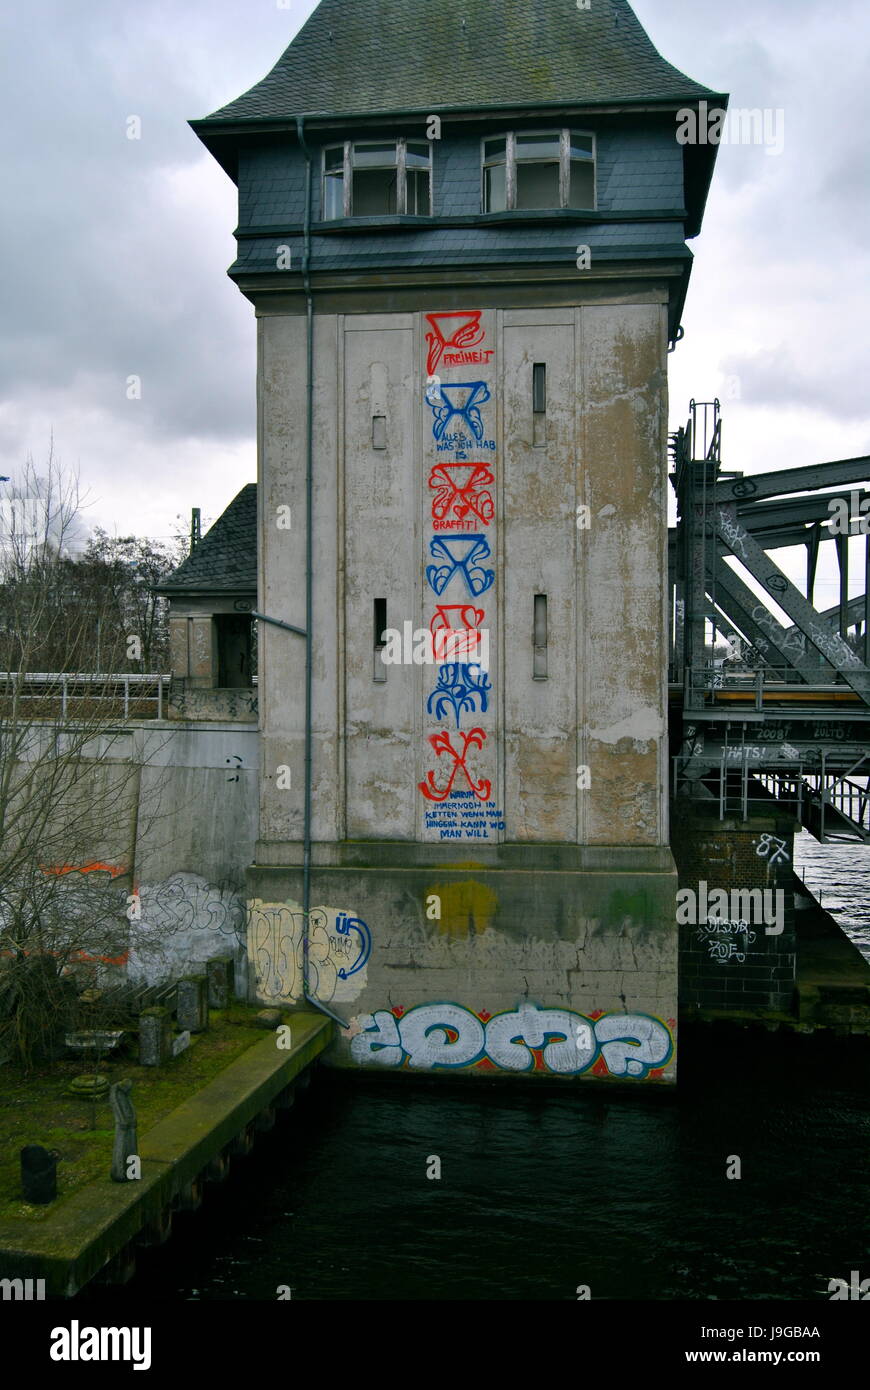 Graffiti und Street Art Berlin, Berlin, Deutschland Stockfoto